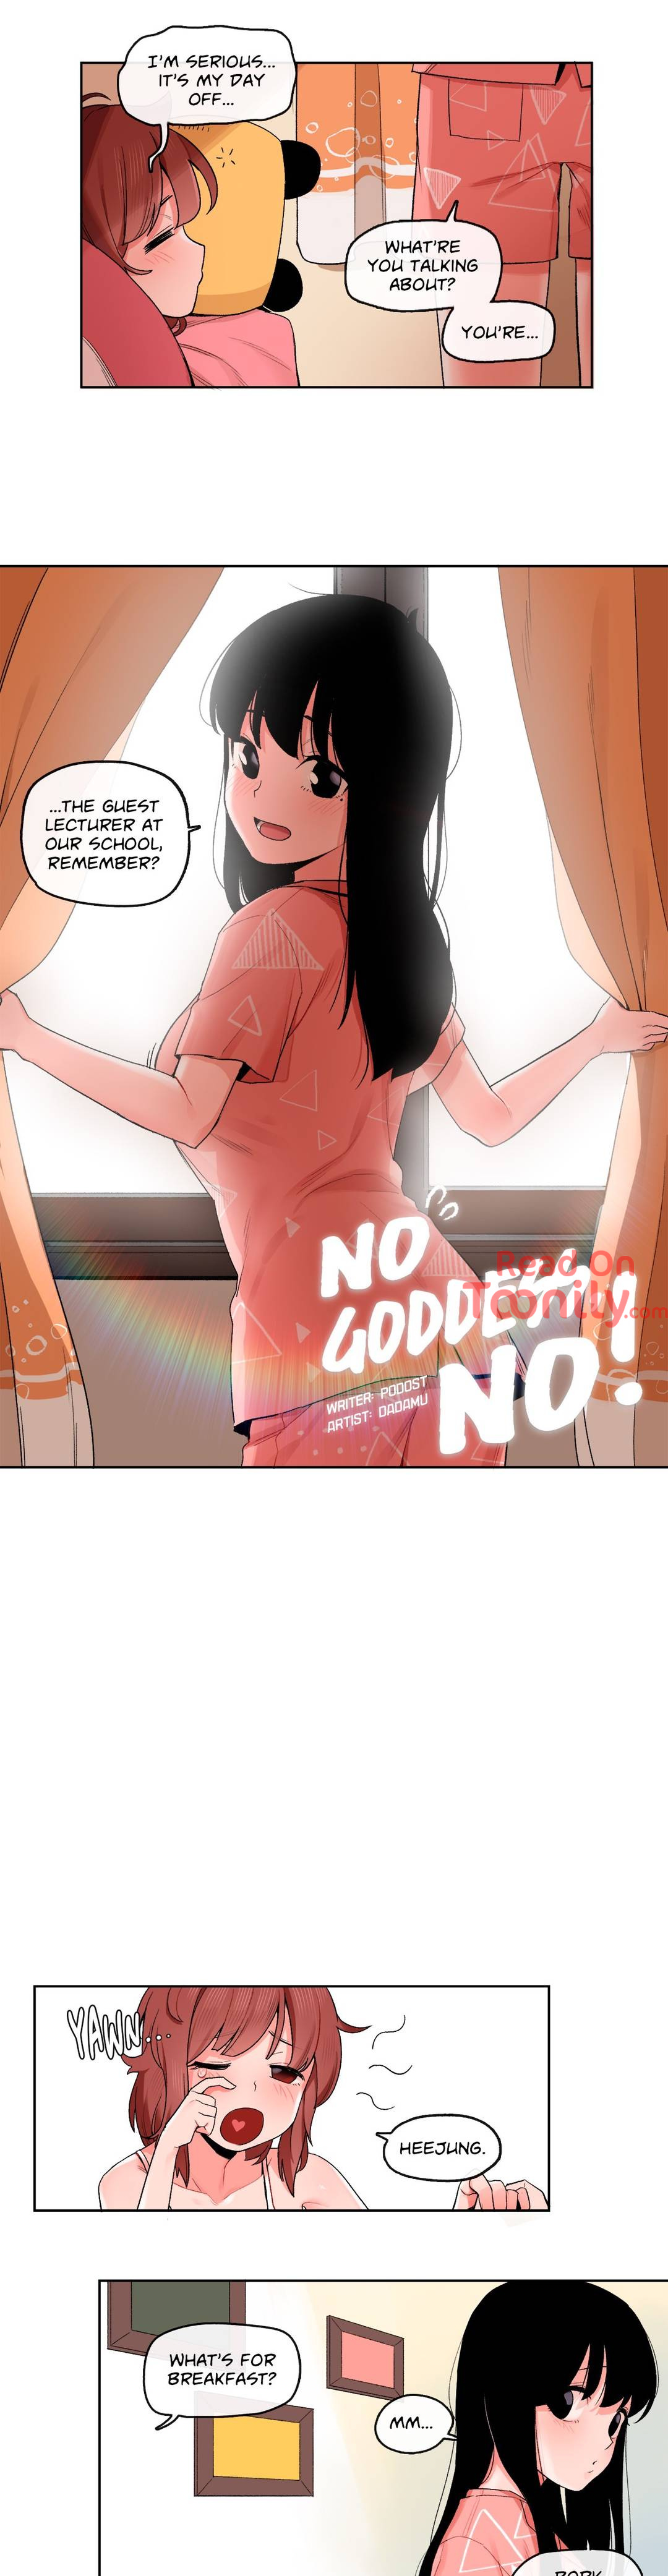 No Goddess, no! image